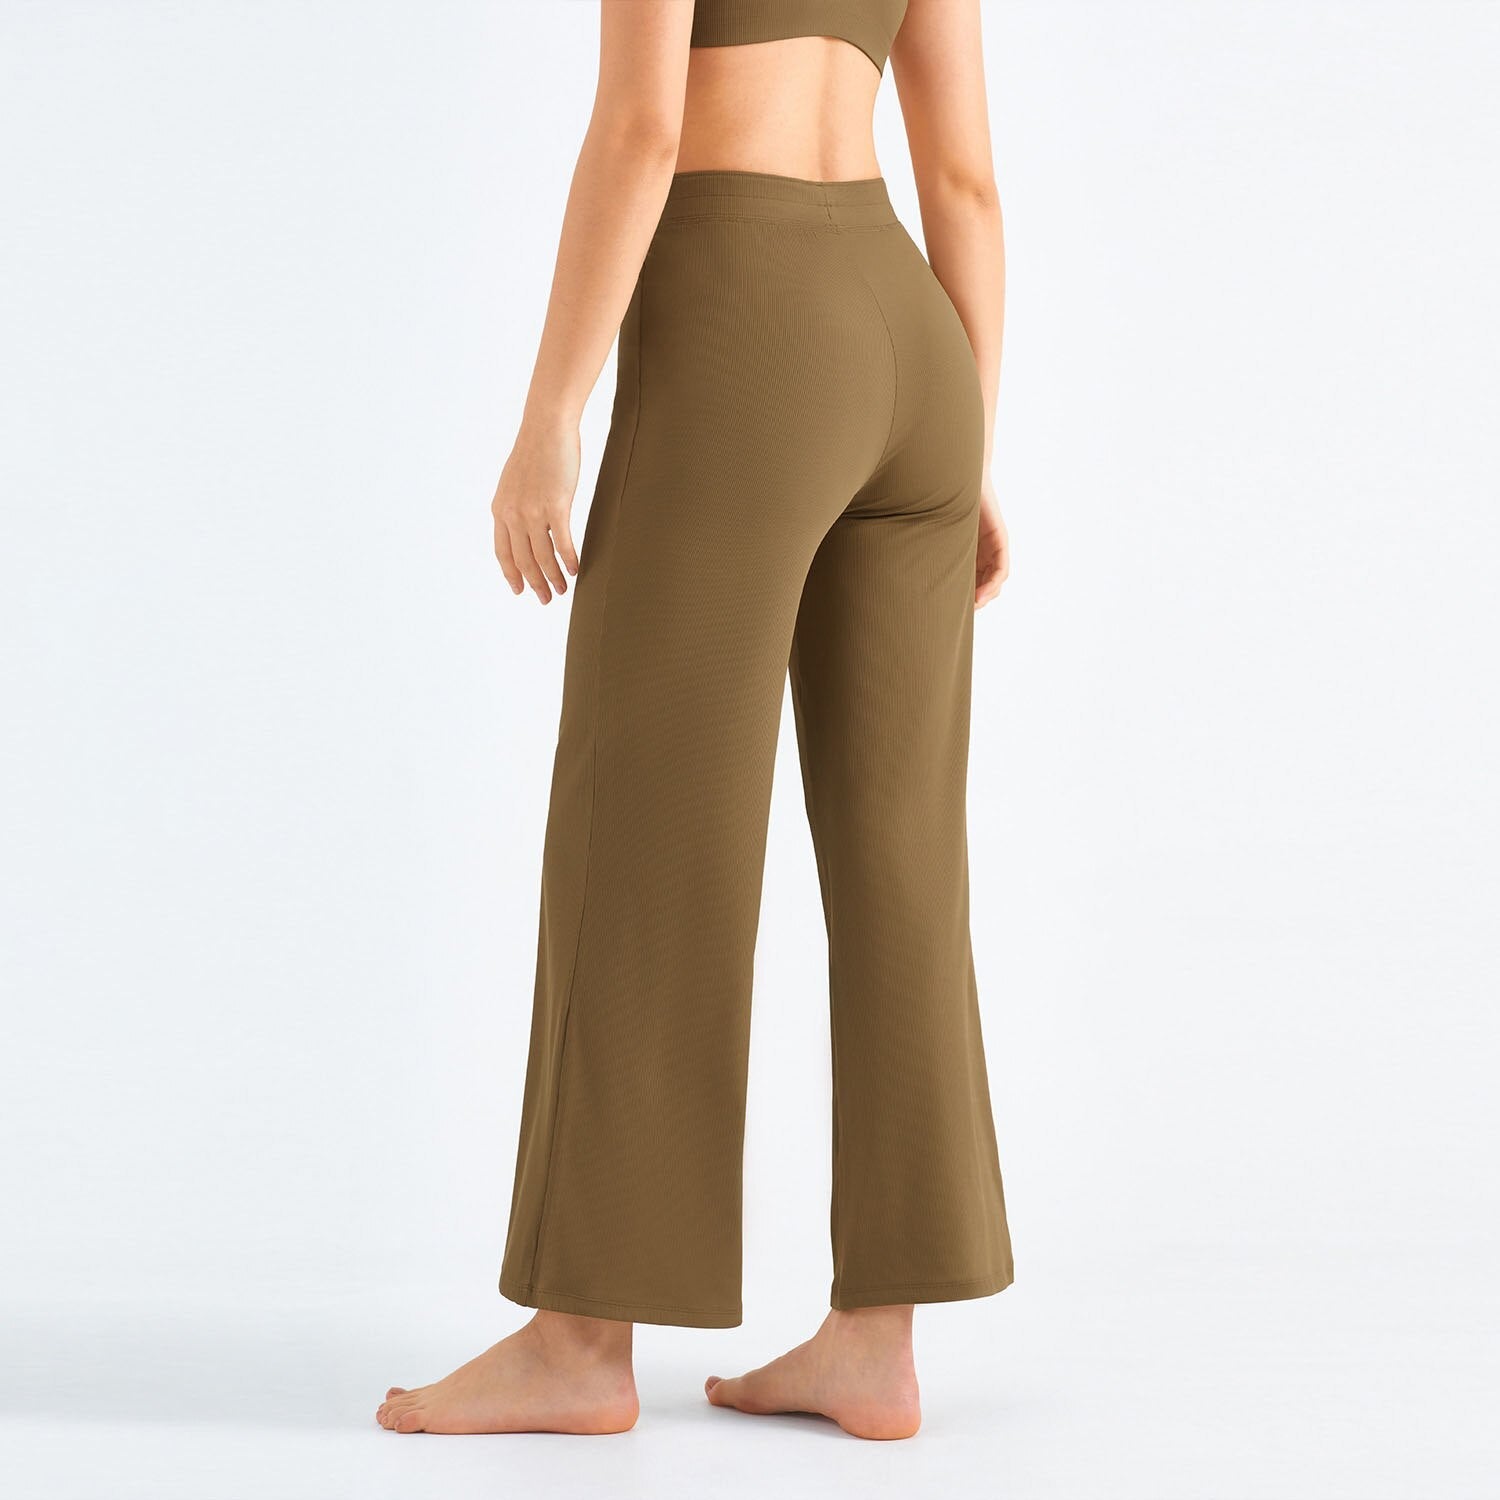 Pantalon Yoga Ample - Marron / S